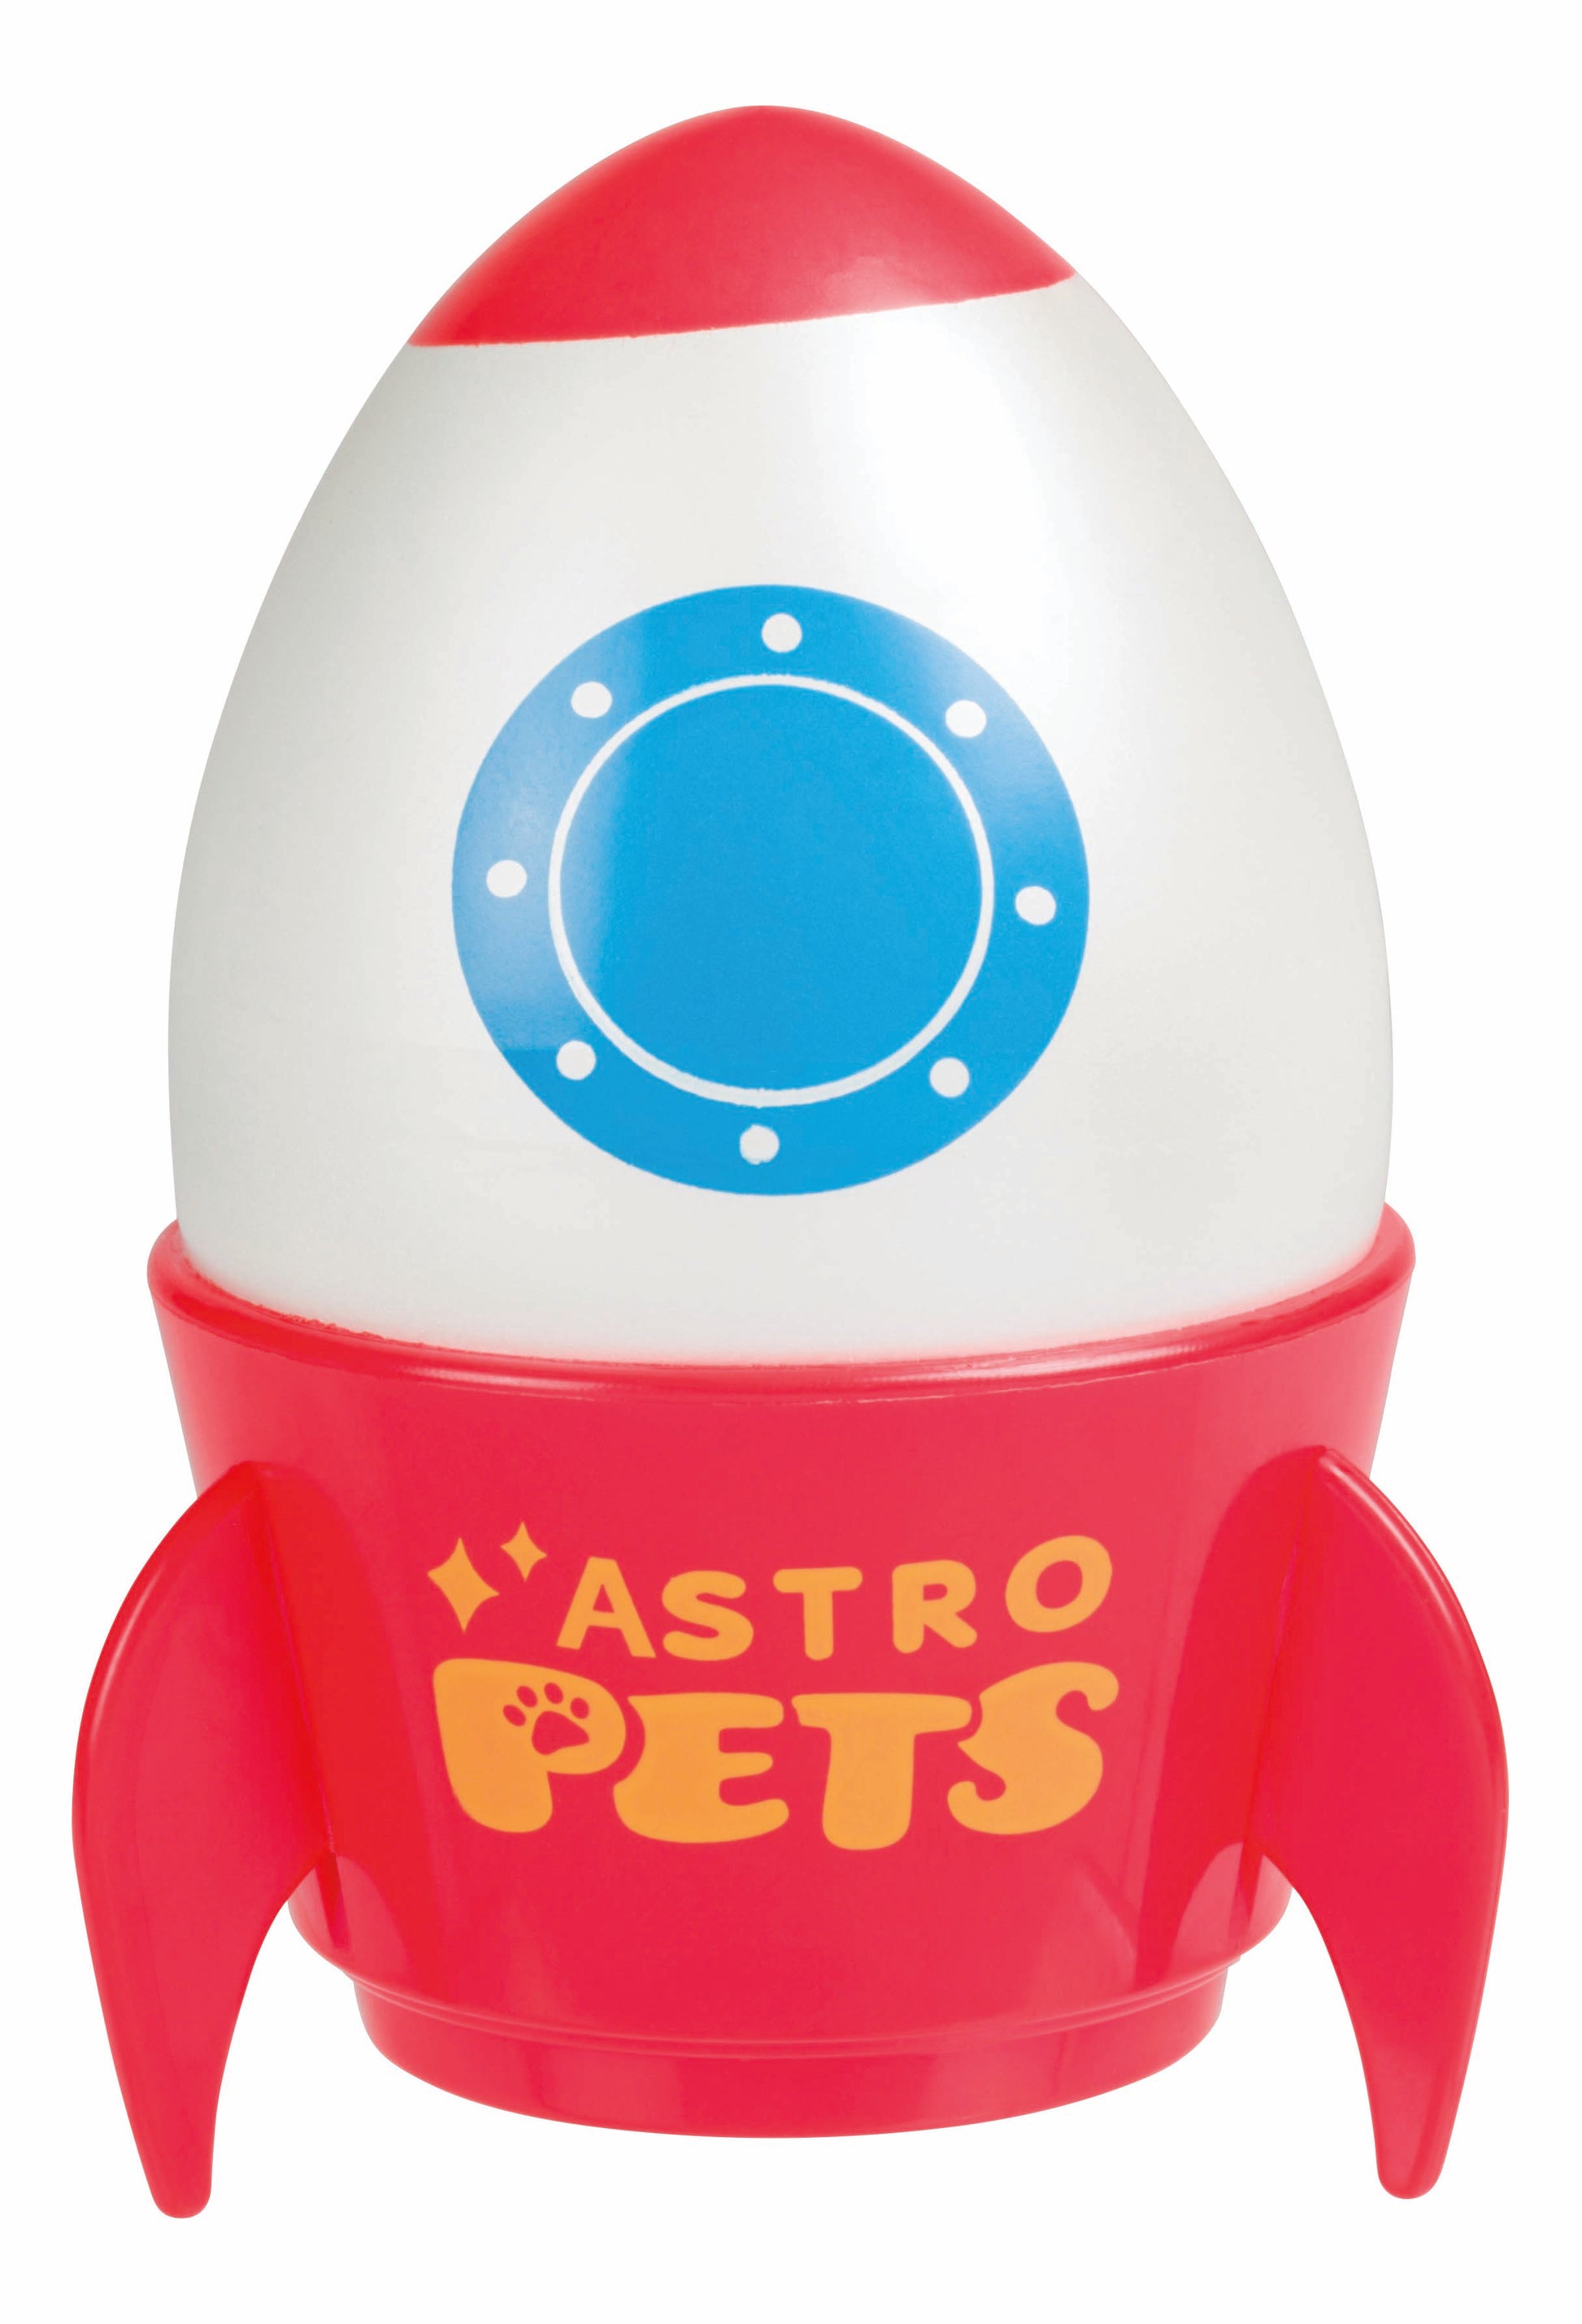 Toysmith Astro Grow Pets